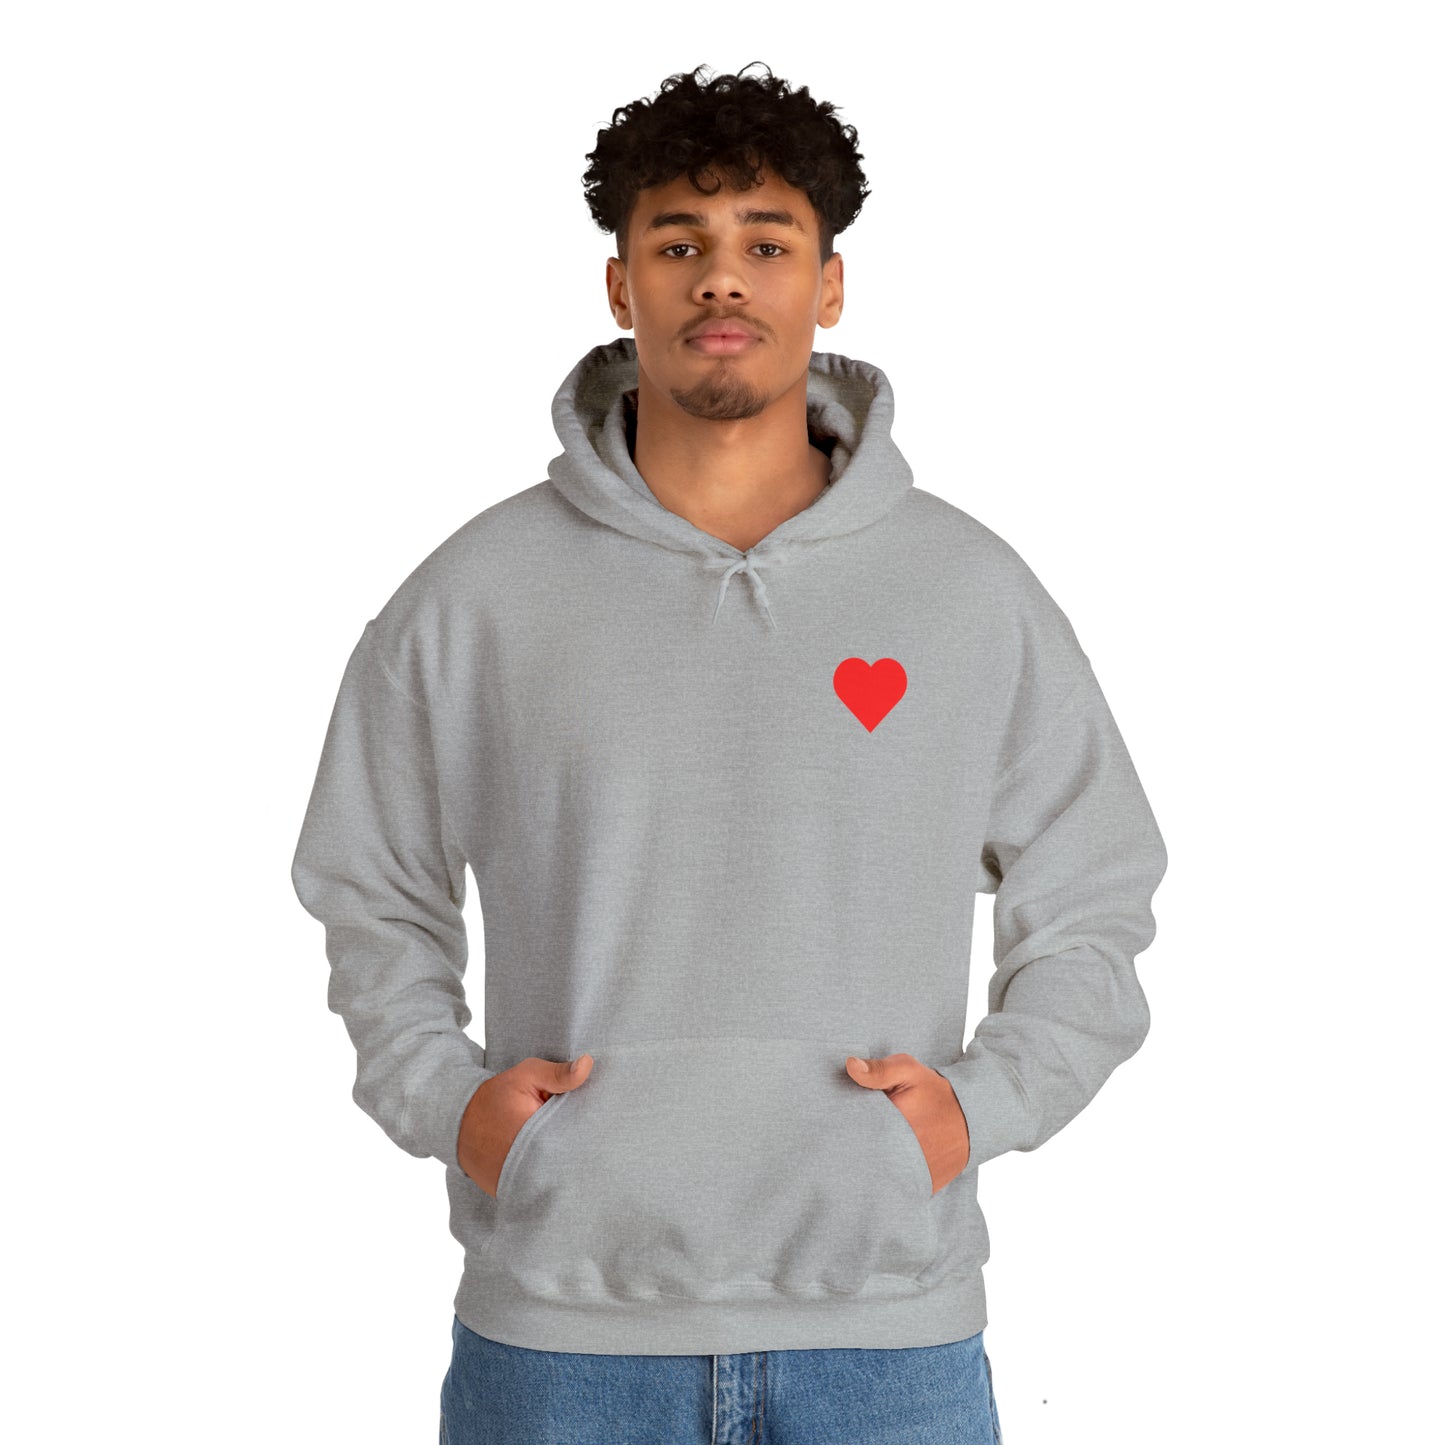 Tell Them You Love Them Hooded Sweatshirt